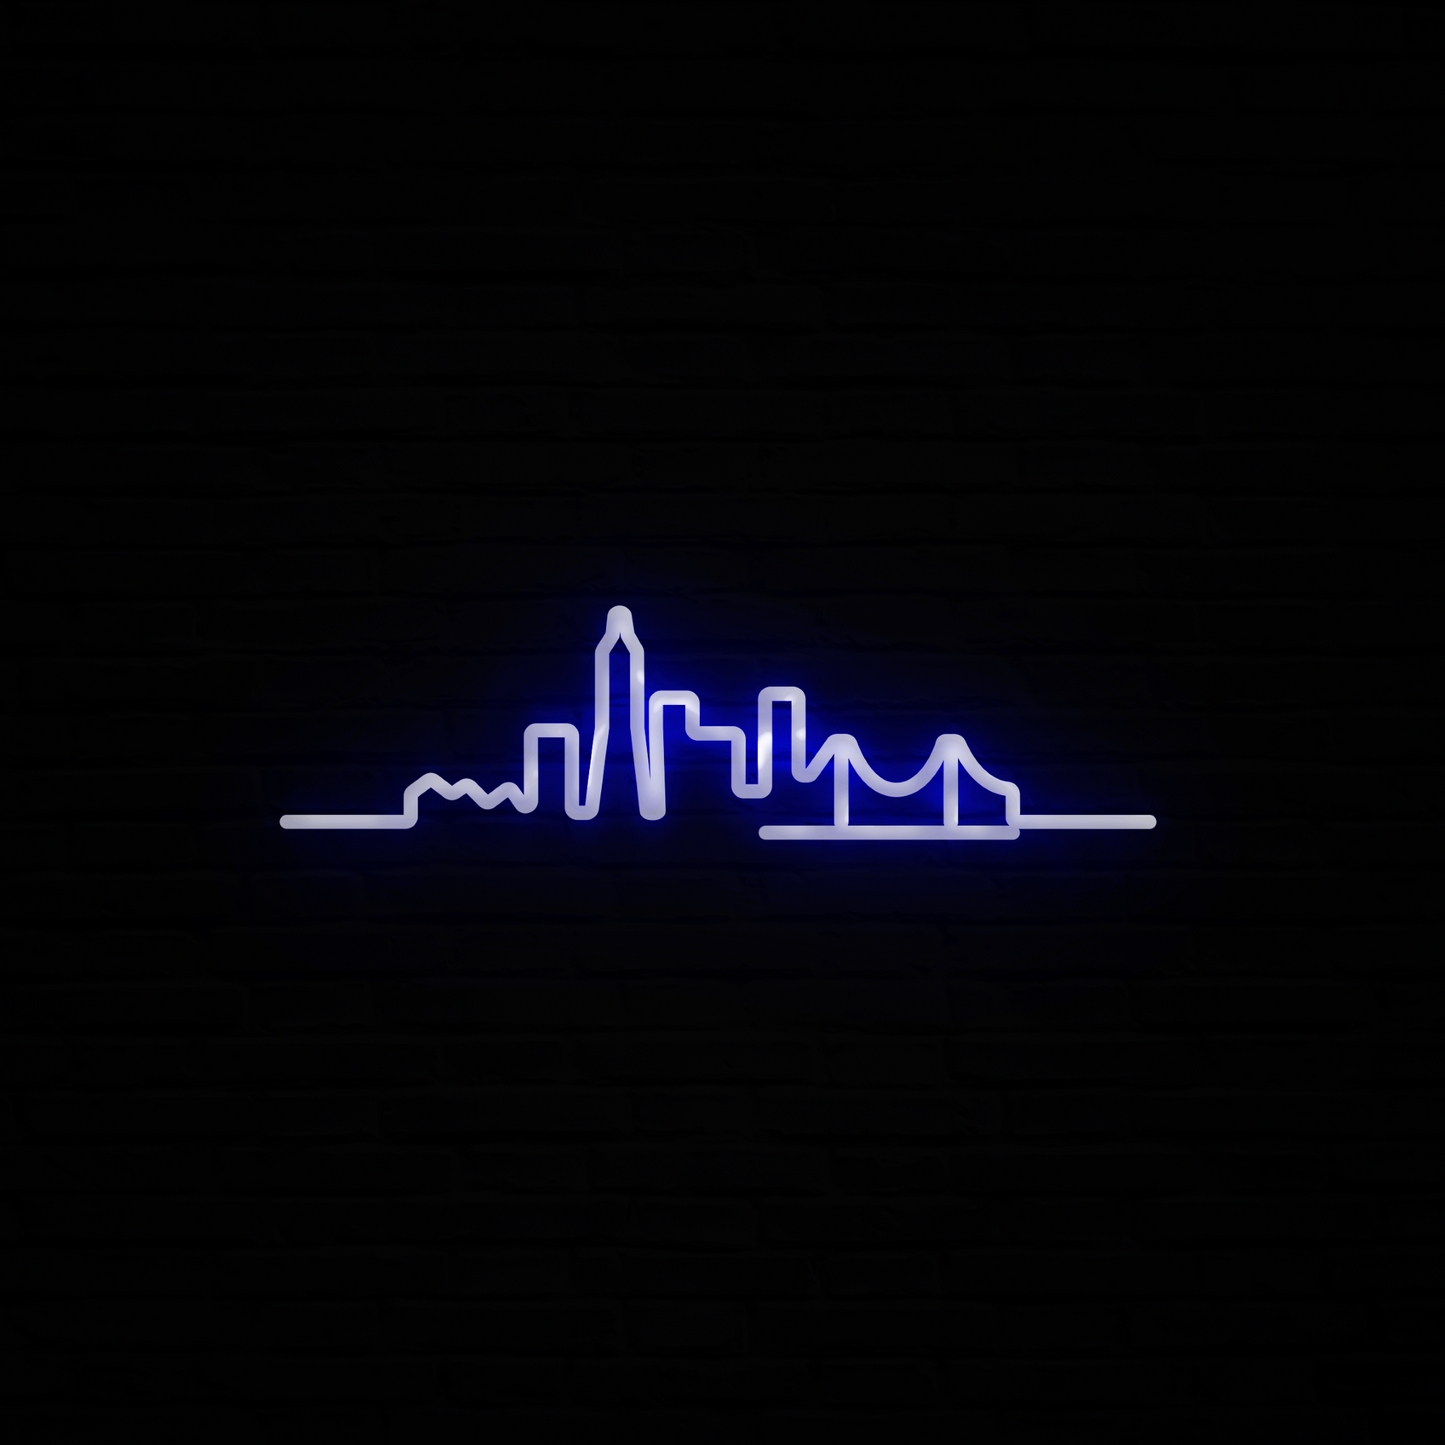 Panorama Miasta Neon LED